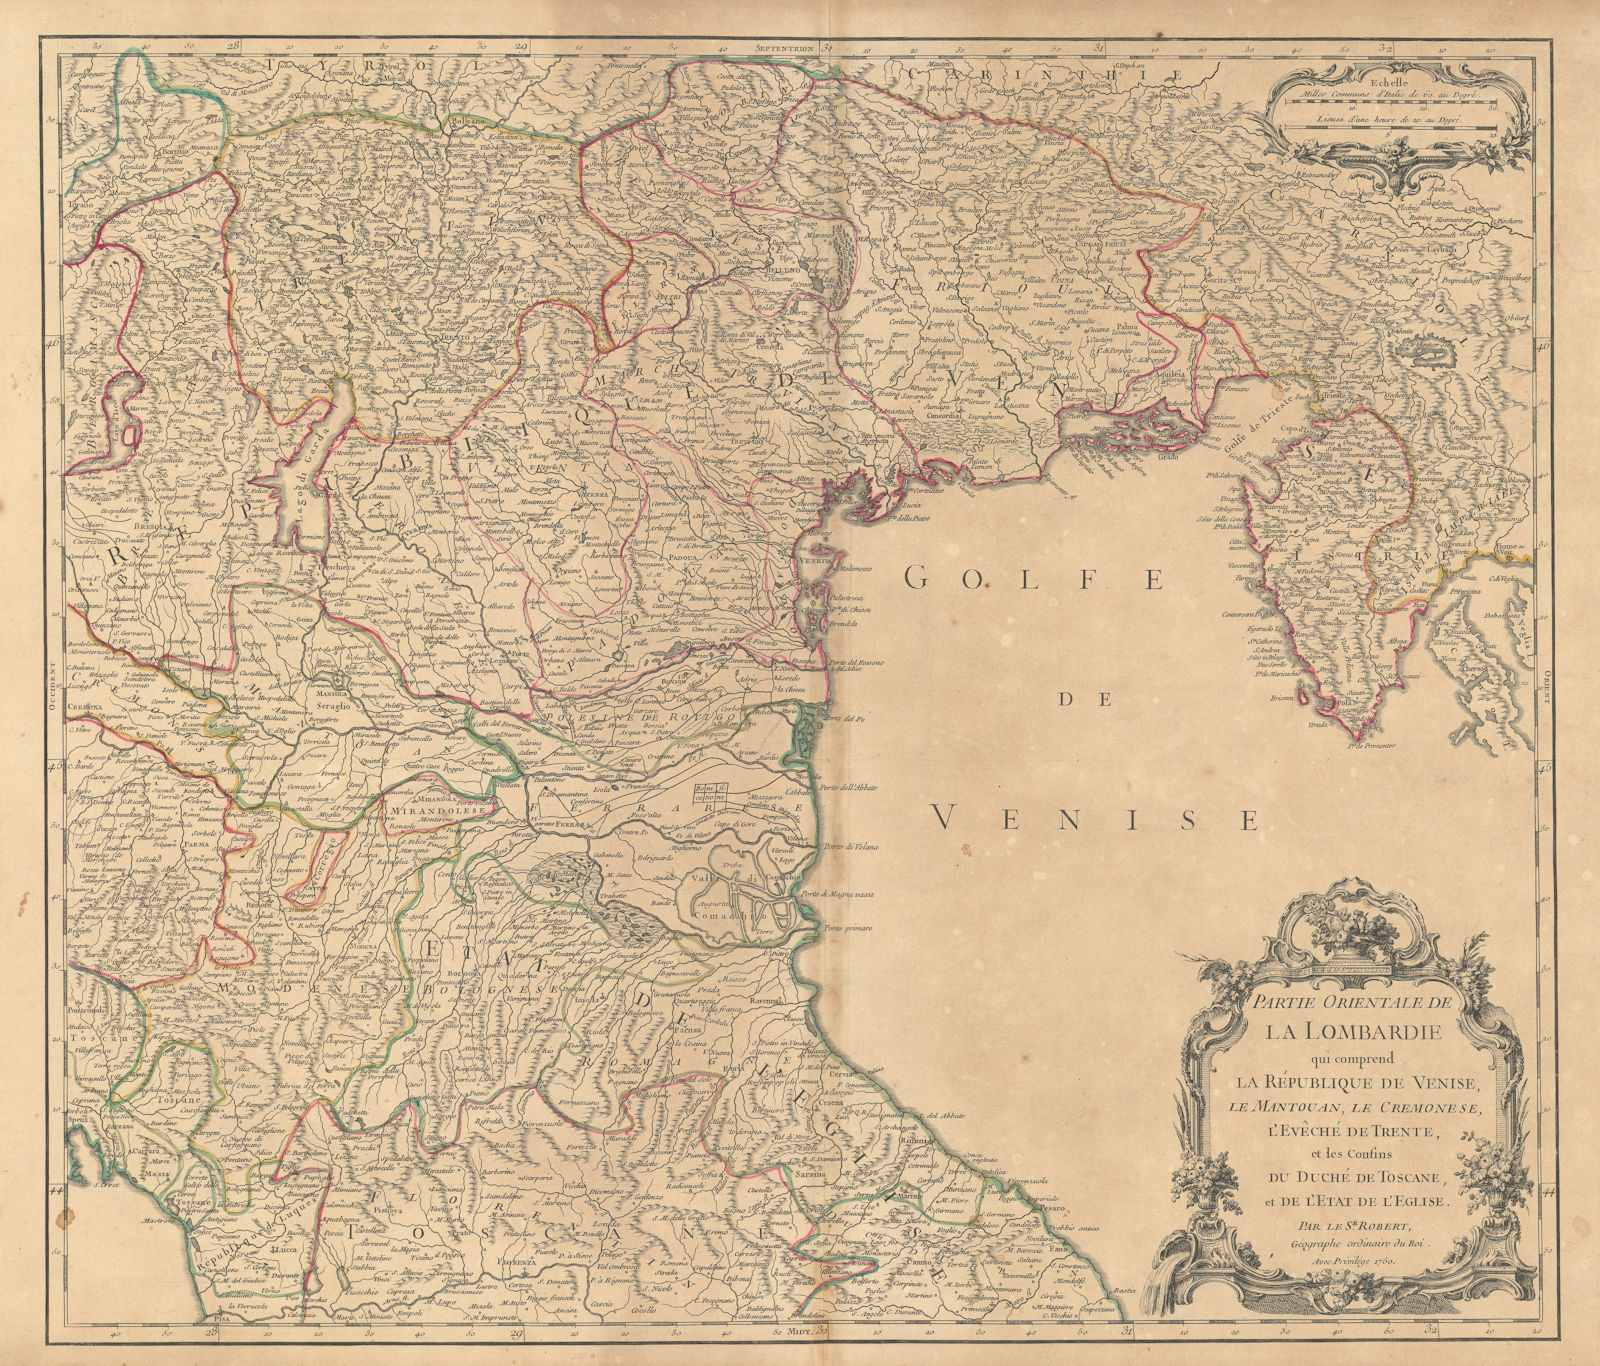 "Partie Orientale de la Lombardie". NE Italy. Veneto Lombardy. VAUGONDY 1750 map